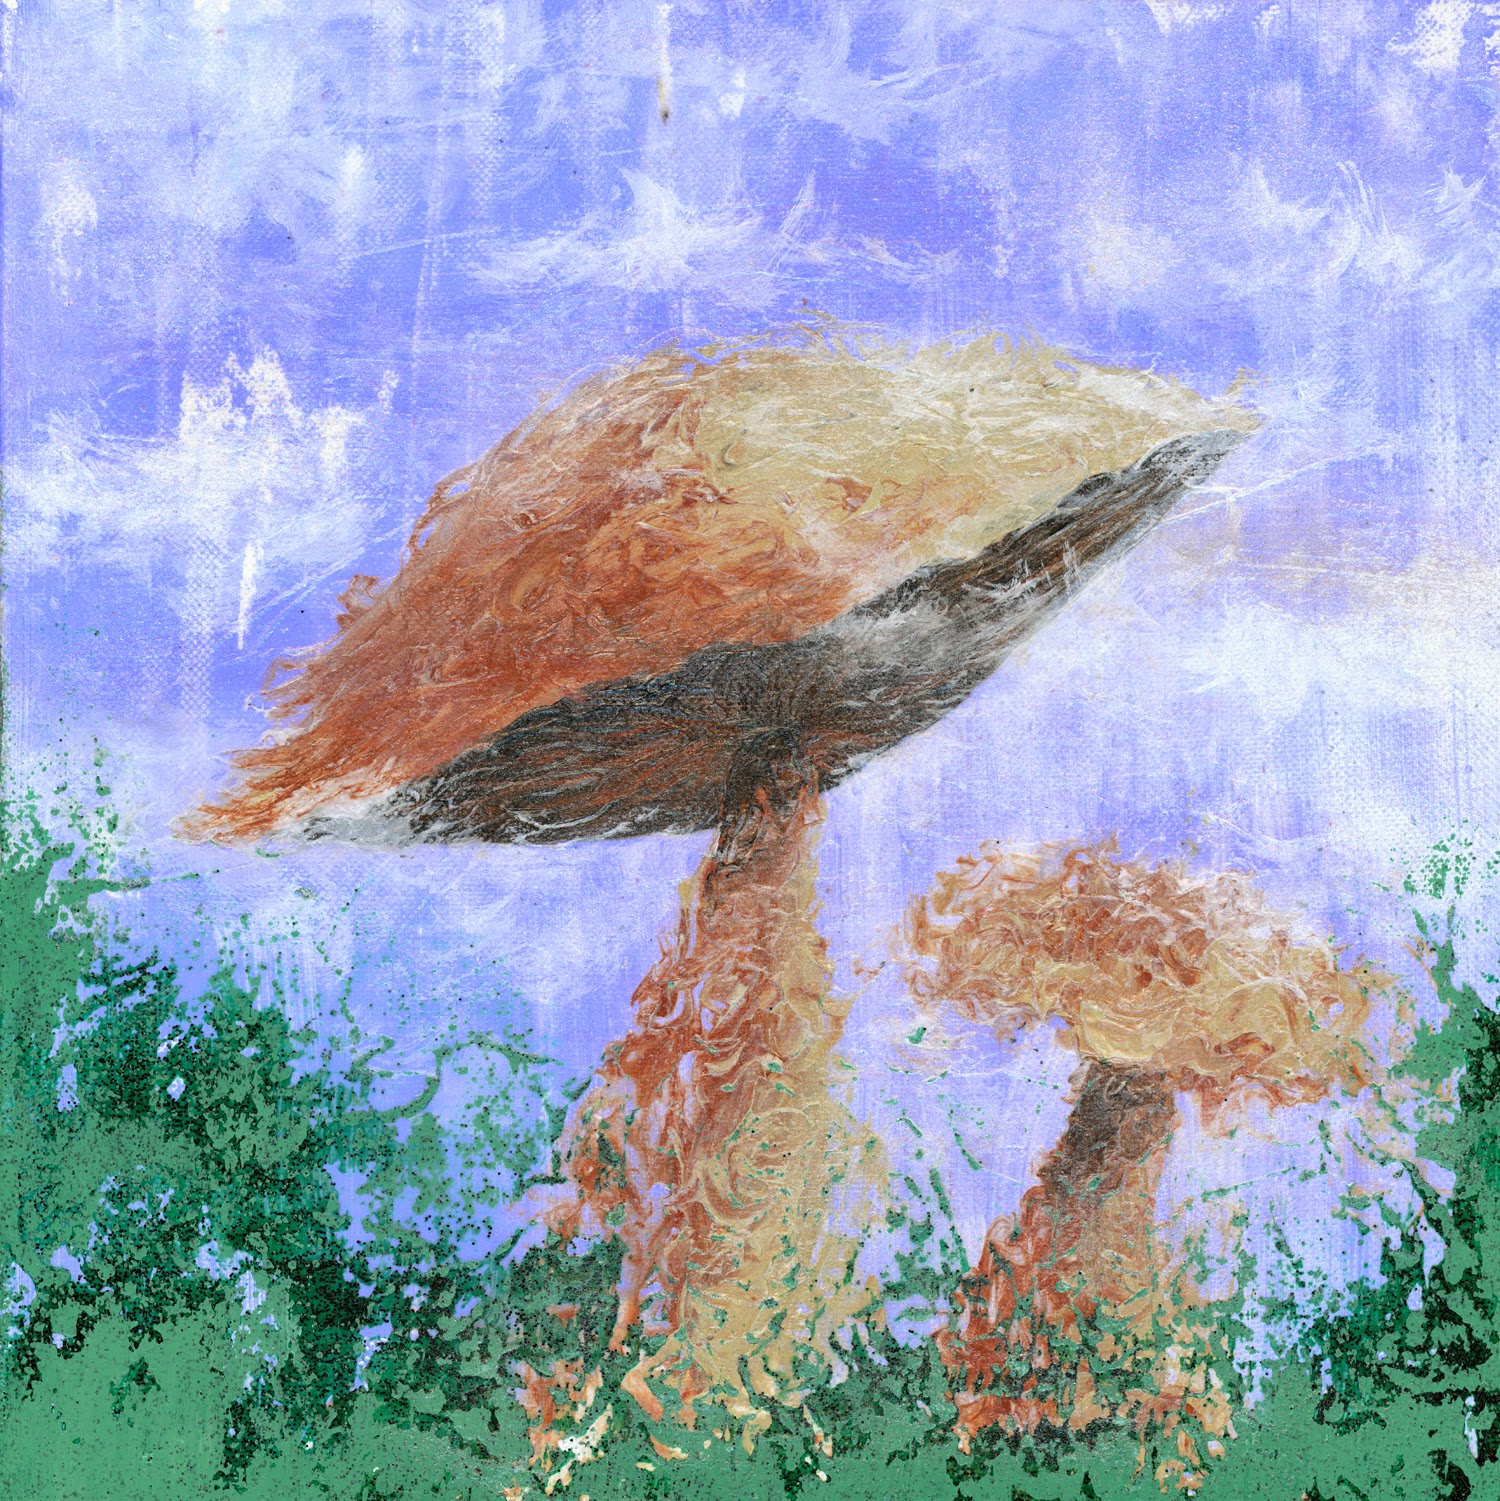  "Mushroom Mist" by Emily Magone